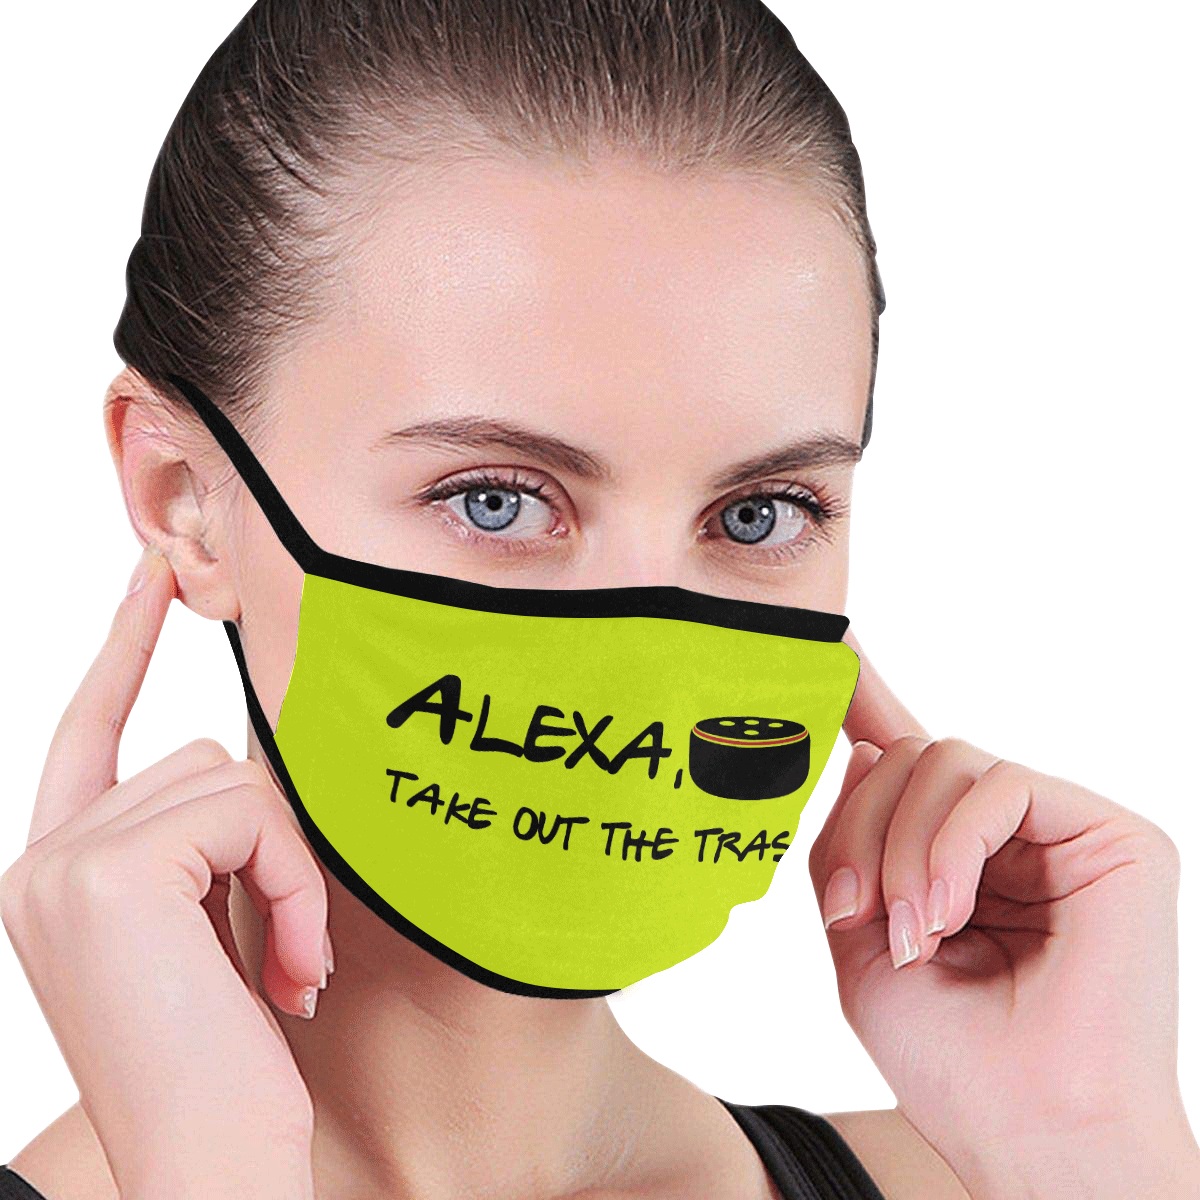 Humor Alexa take out the trash - lime Mouth Mask